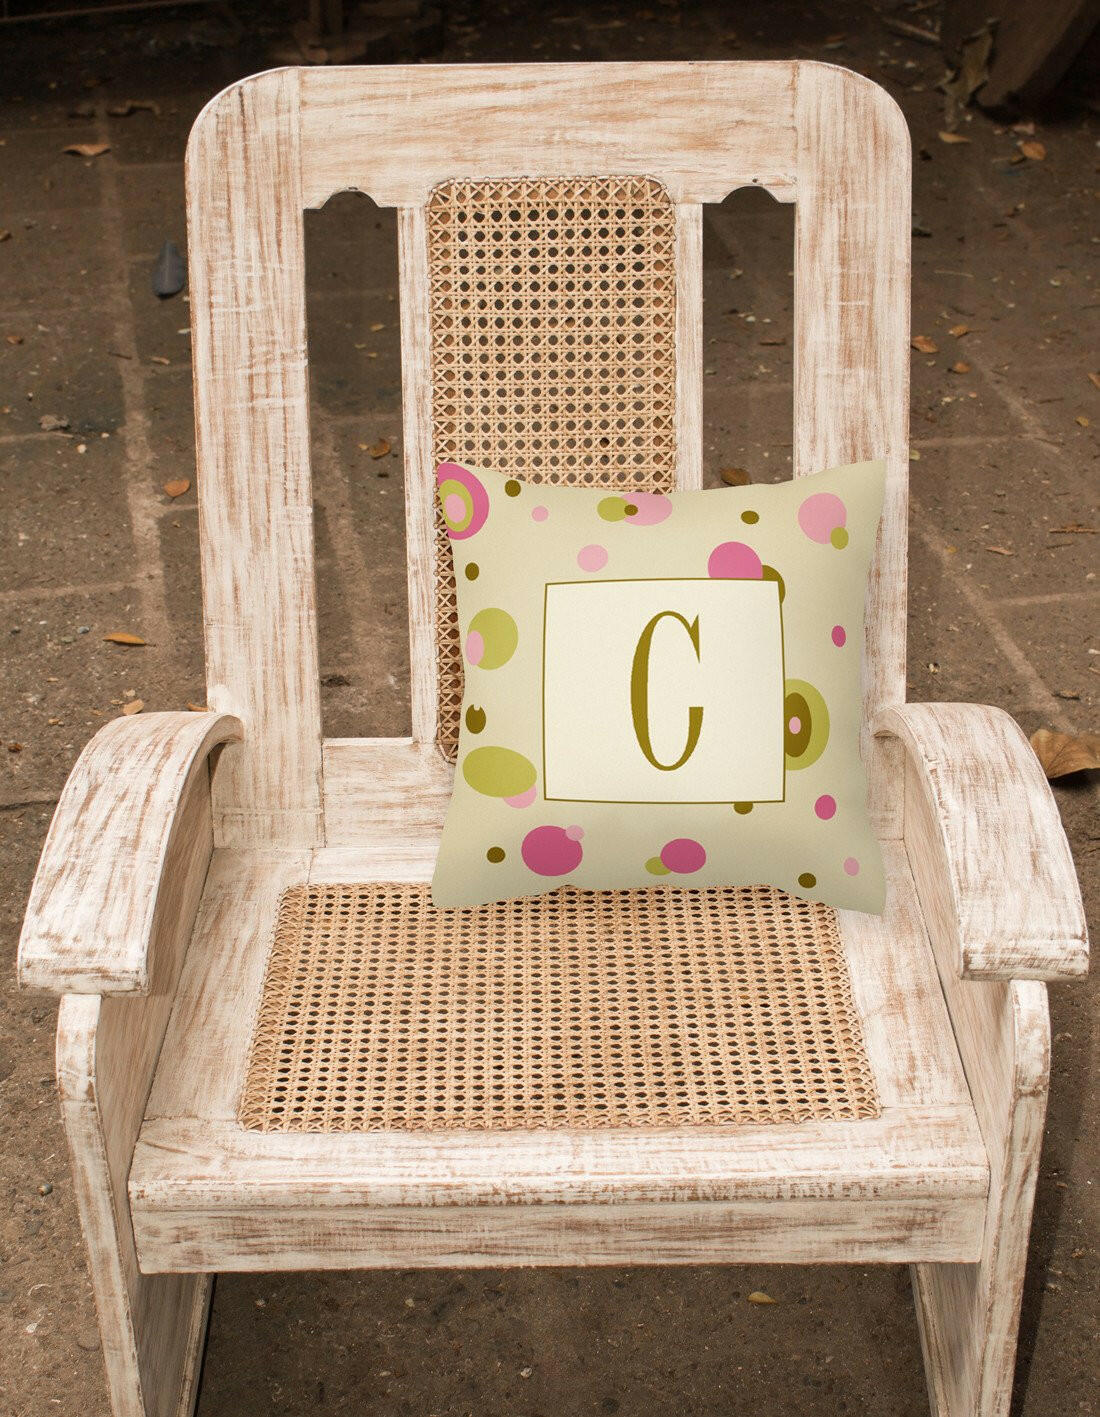 Letter C Initial Monogram - Tan Dots Decorative   Canvas Fabric Pillow - the-store.com